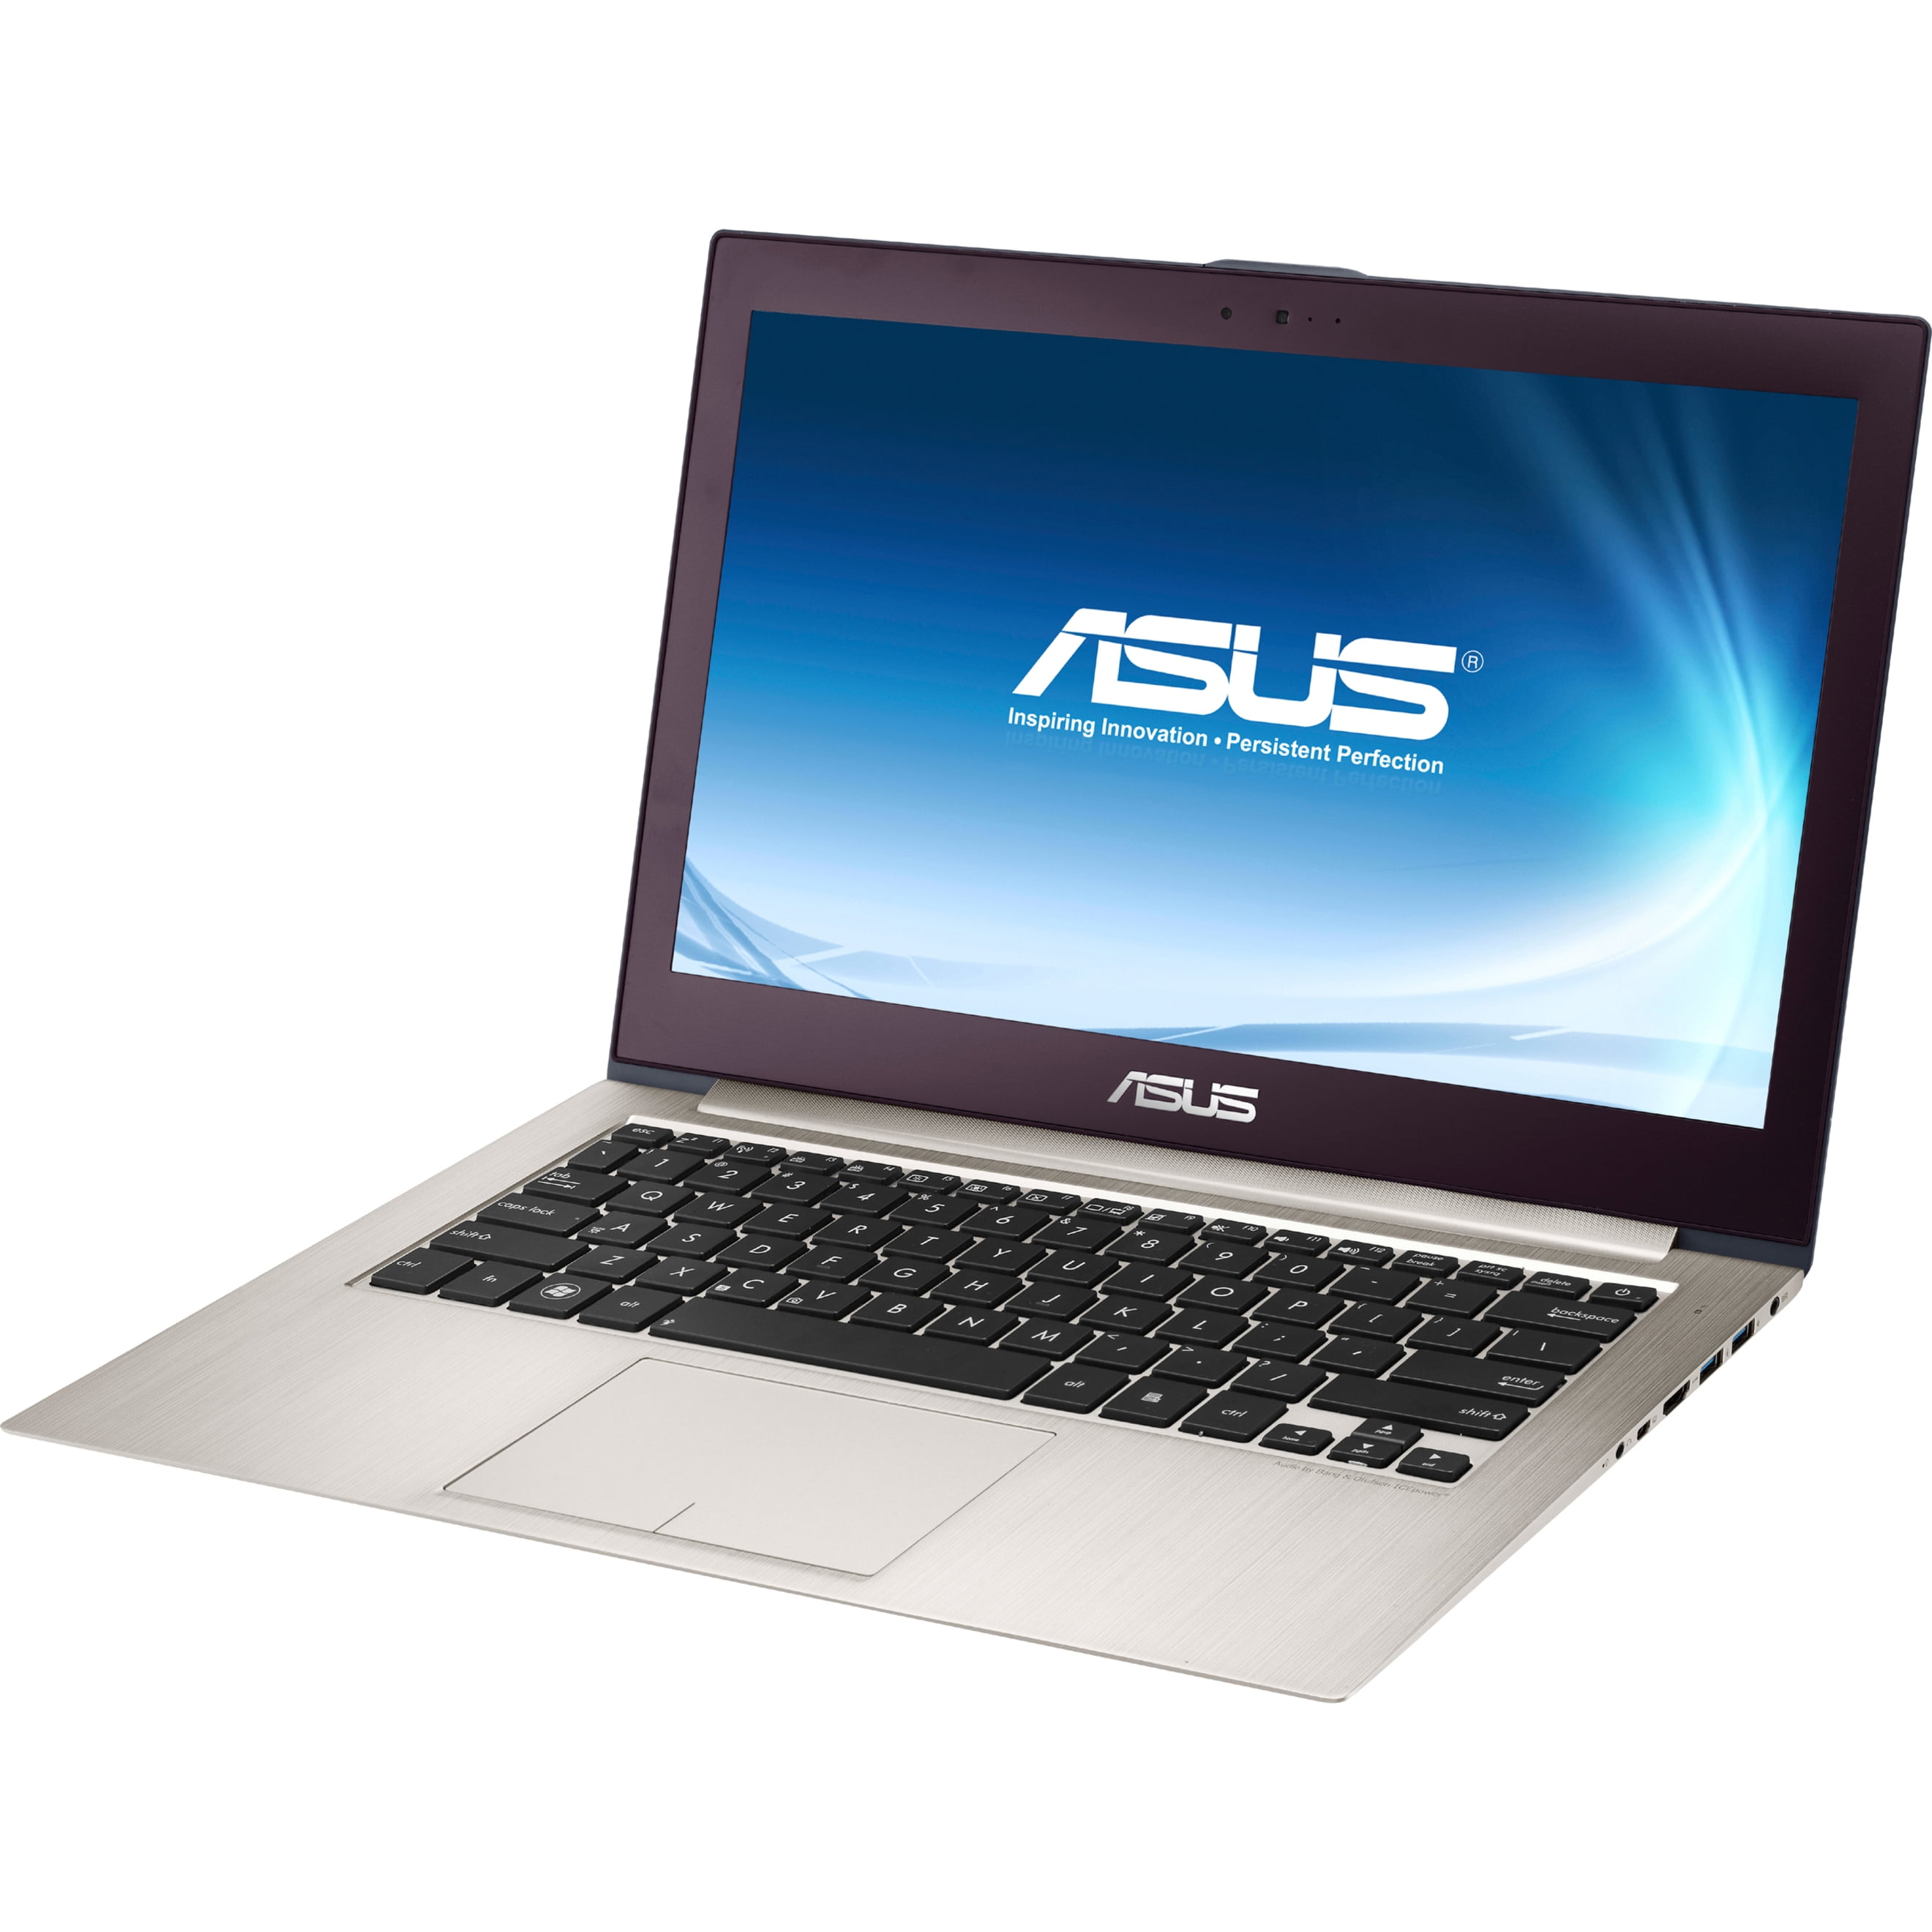 compile Embryo flap Asus ZenBook 13.3" Full HD Ultrabook, Intel Core i7, 4GB RAM, 500GB HD, 24GB  SSD, Windows 7 Home Premium, UX32VD-DB71 - Walmart.com